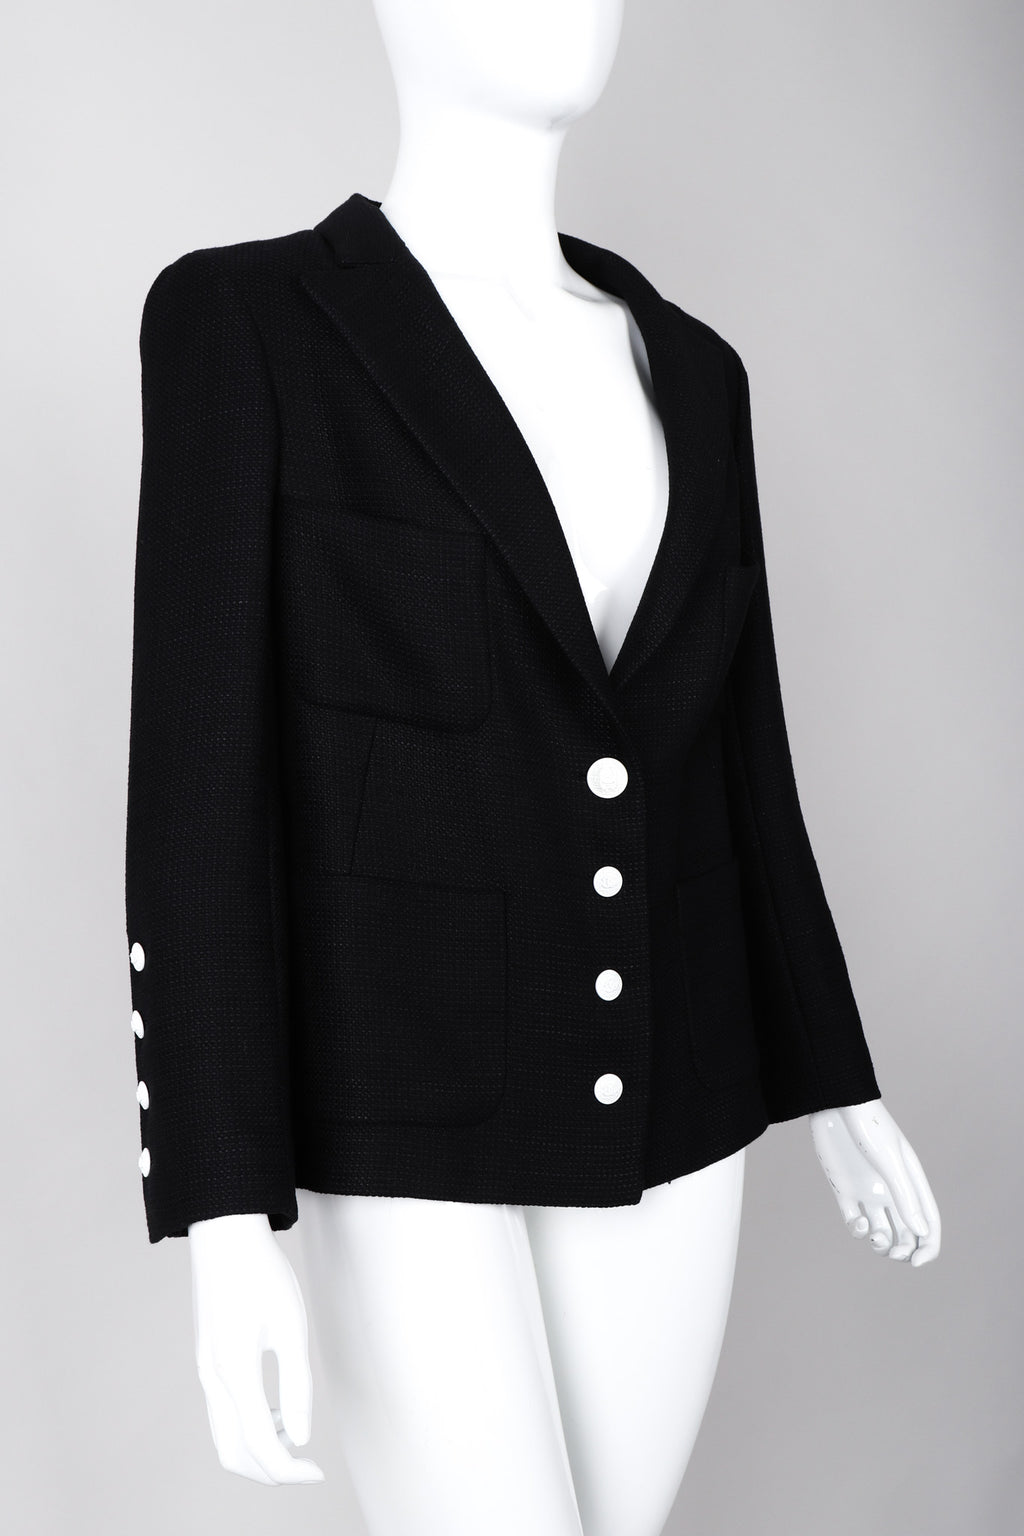 Chanel Cream Jacket - 44 For Sale on 1stDibs  chanel like jacket, chanel  beige jacket, chanel style boucle jacket cream